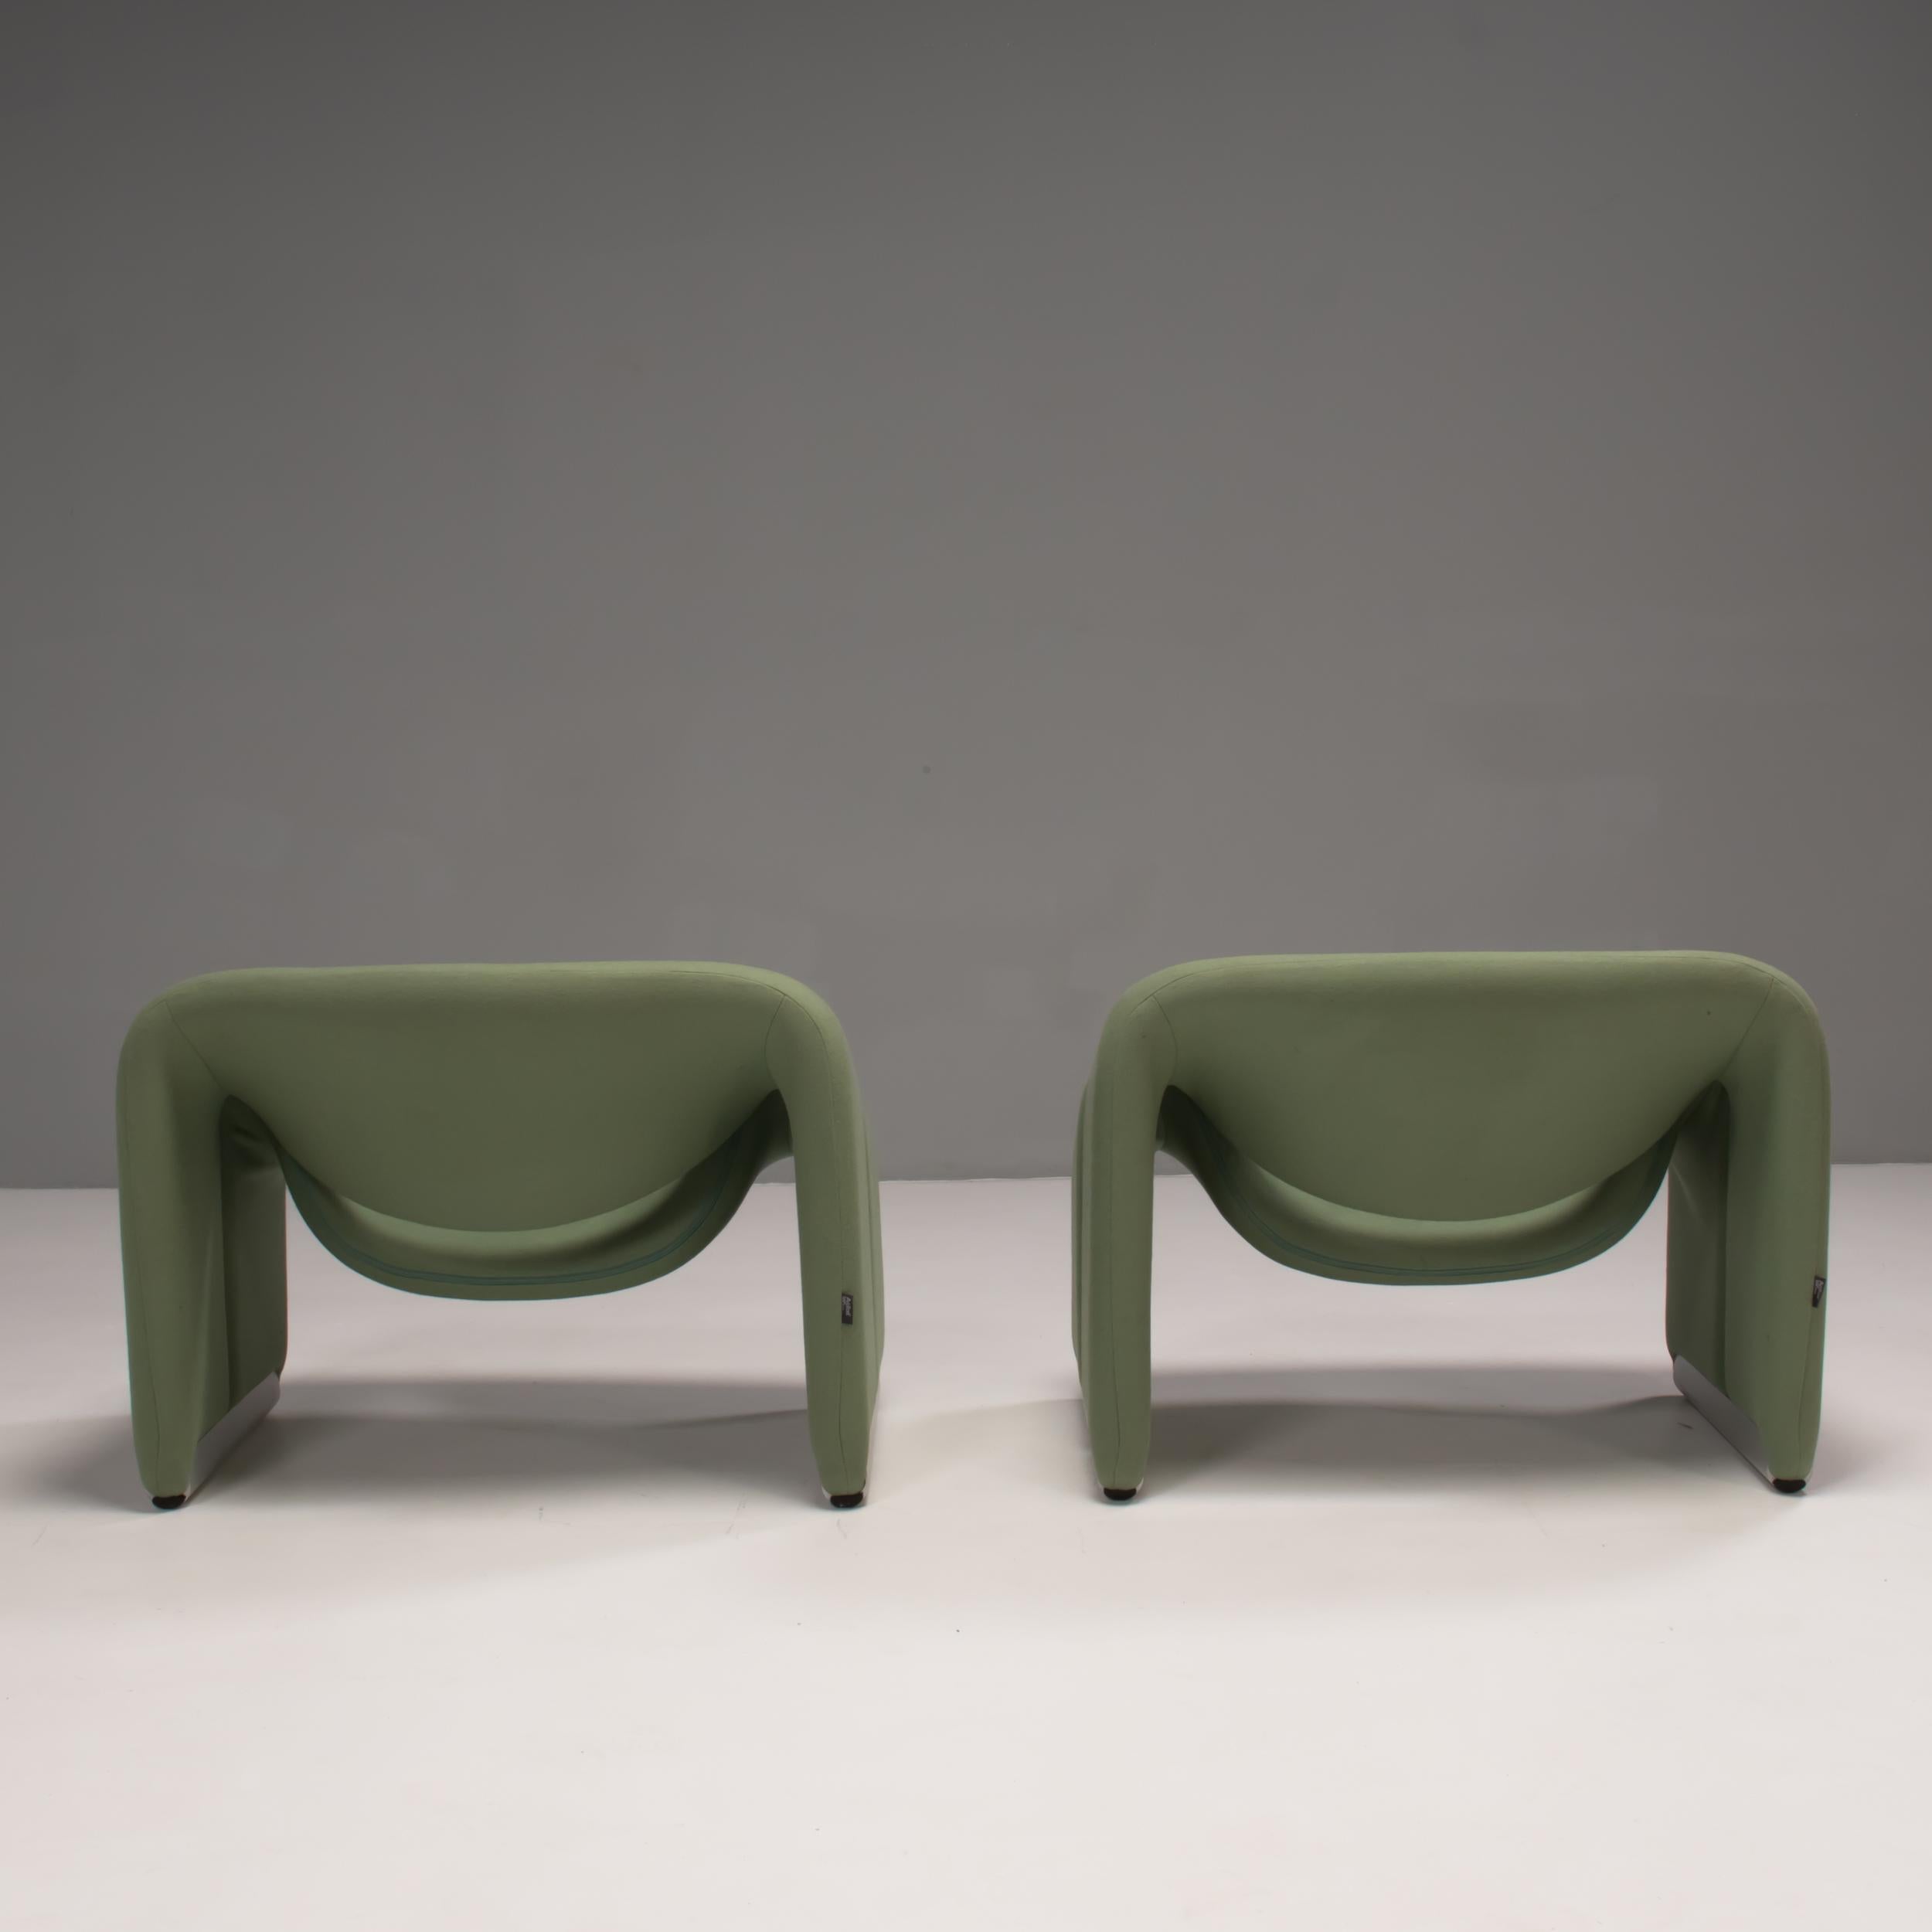 Dutch Pierre Paulin by Artifort Pale Green Fabric F598 Groovy Chair, Set of Two